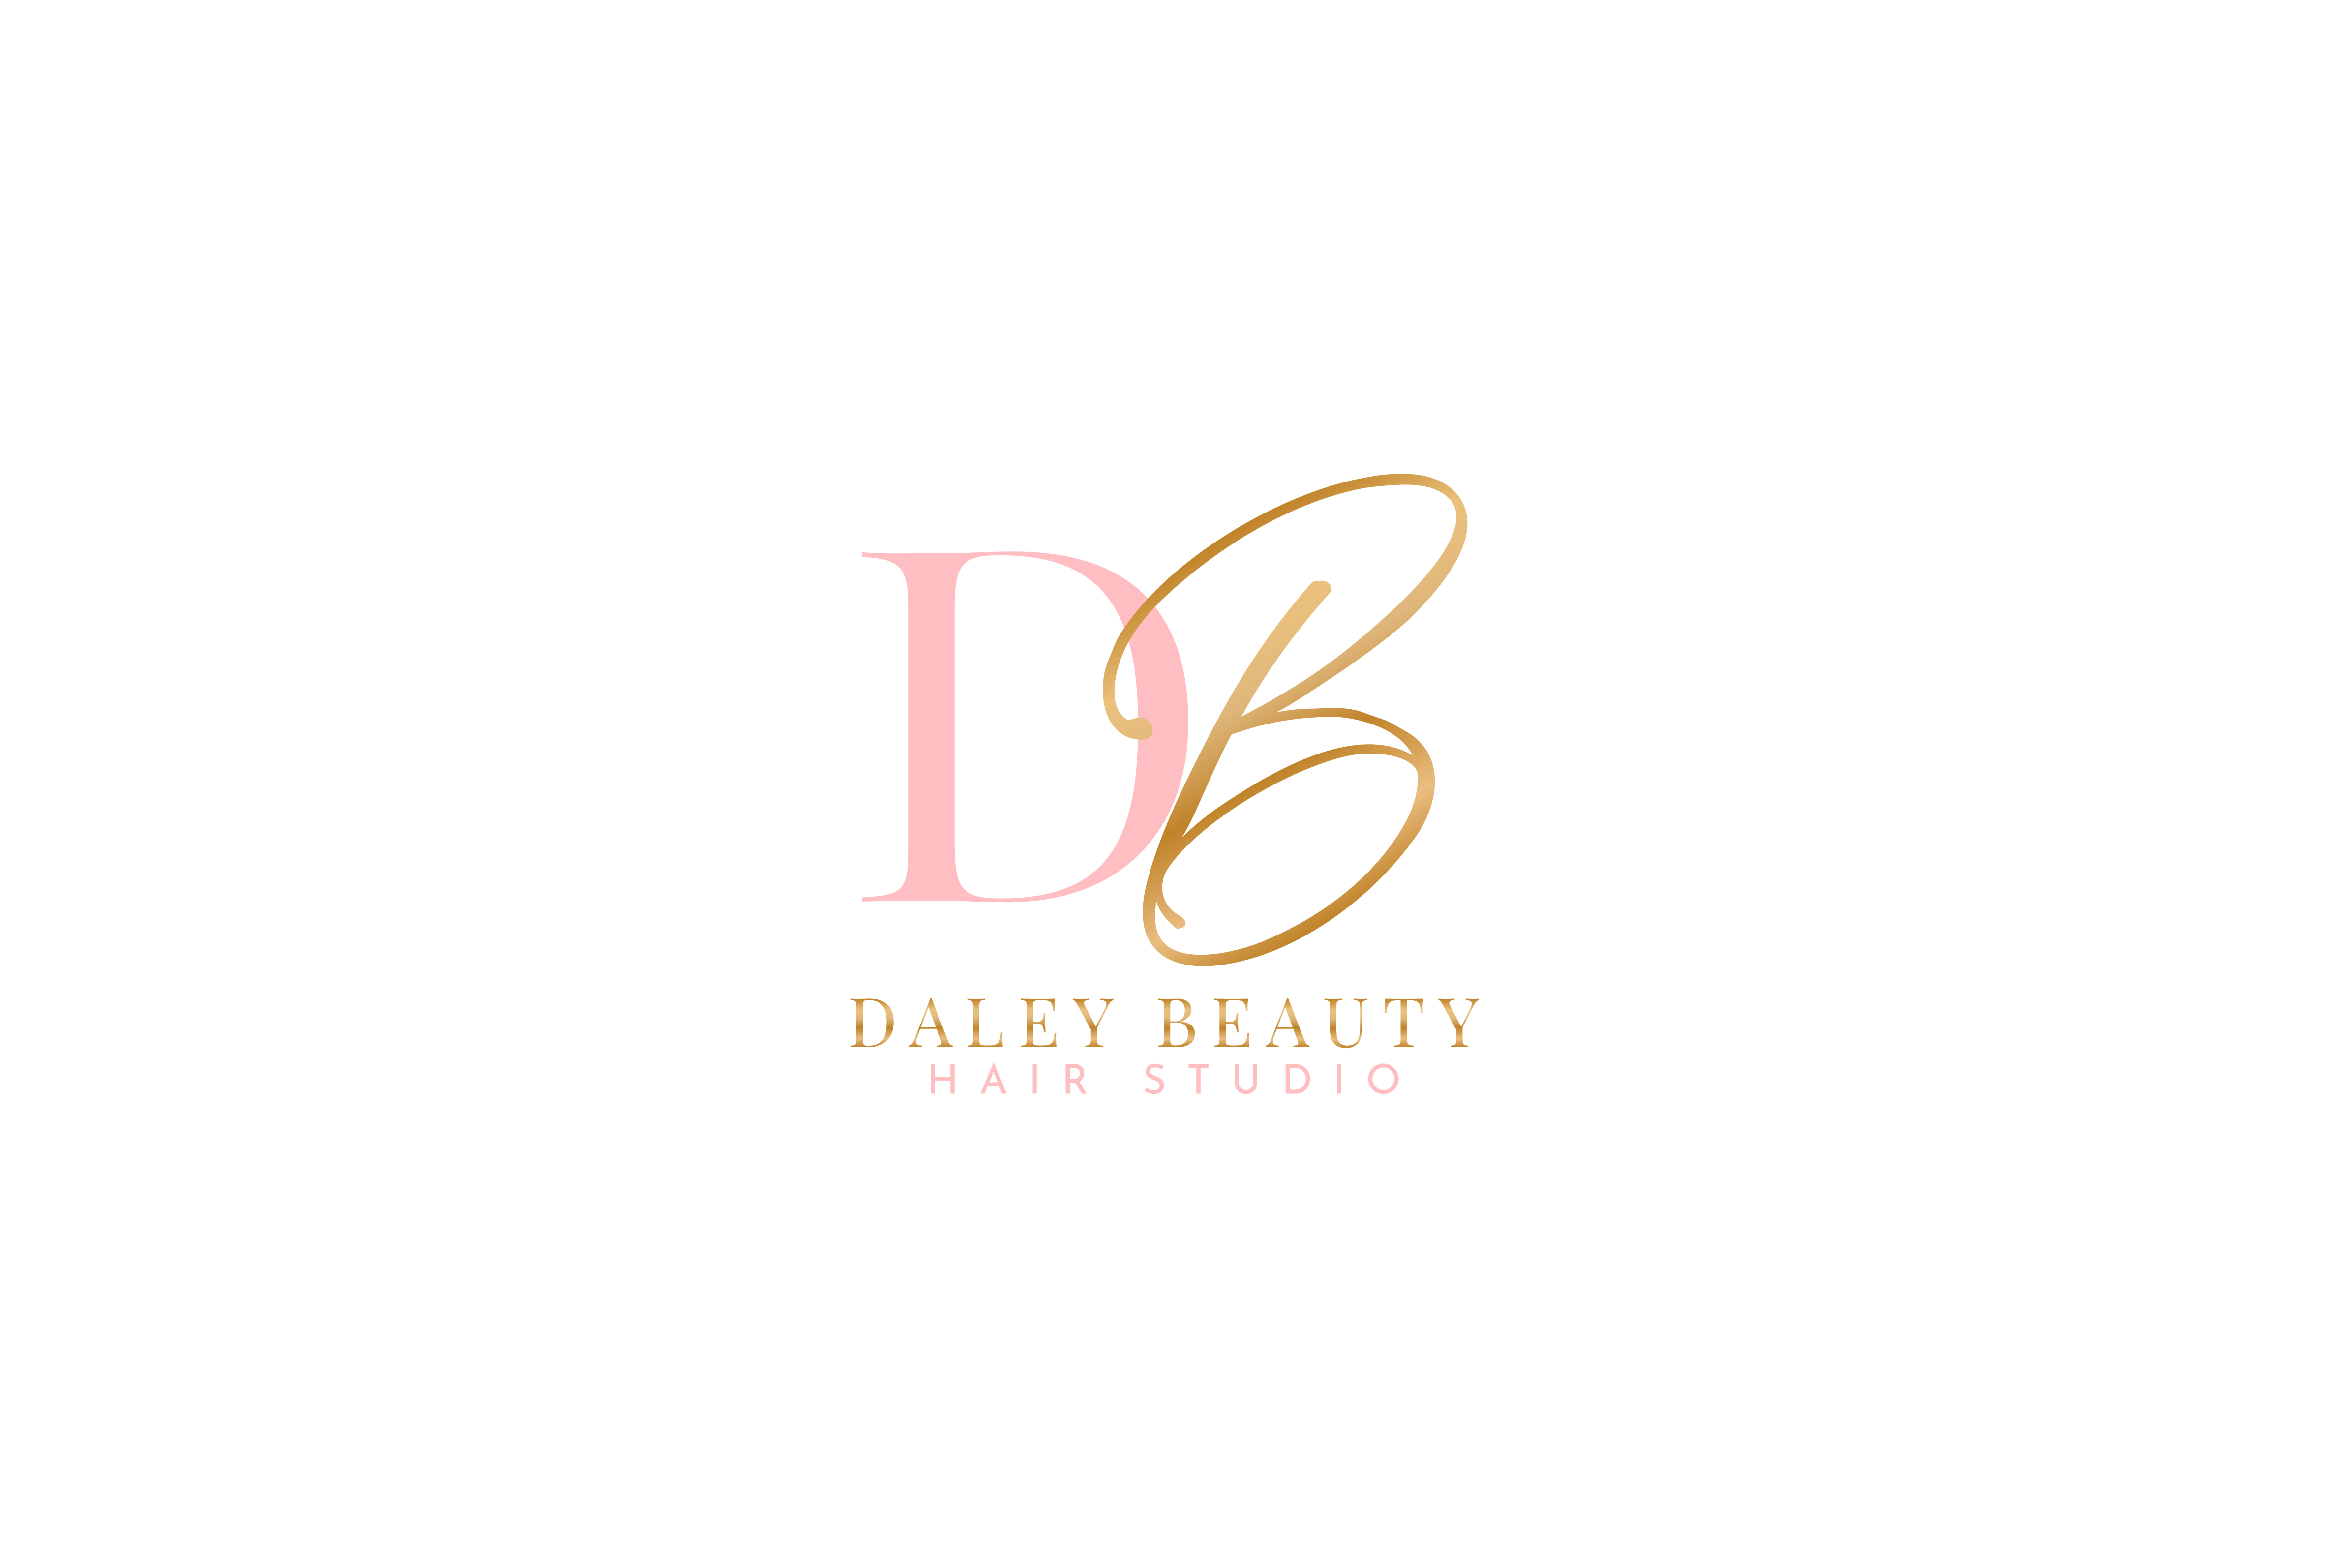 Daley Beauty Hair Studio